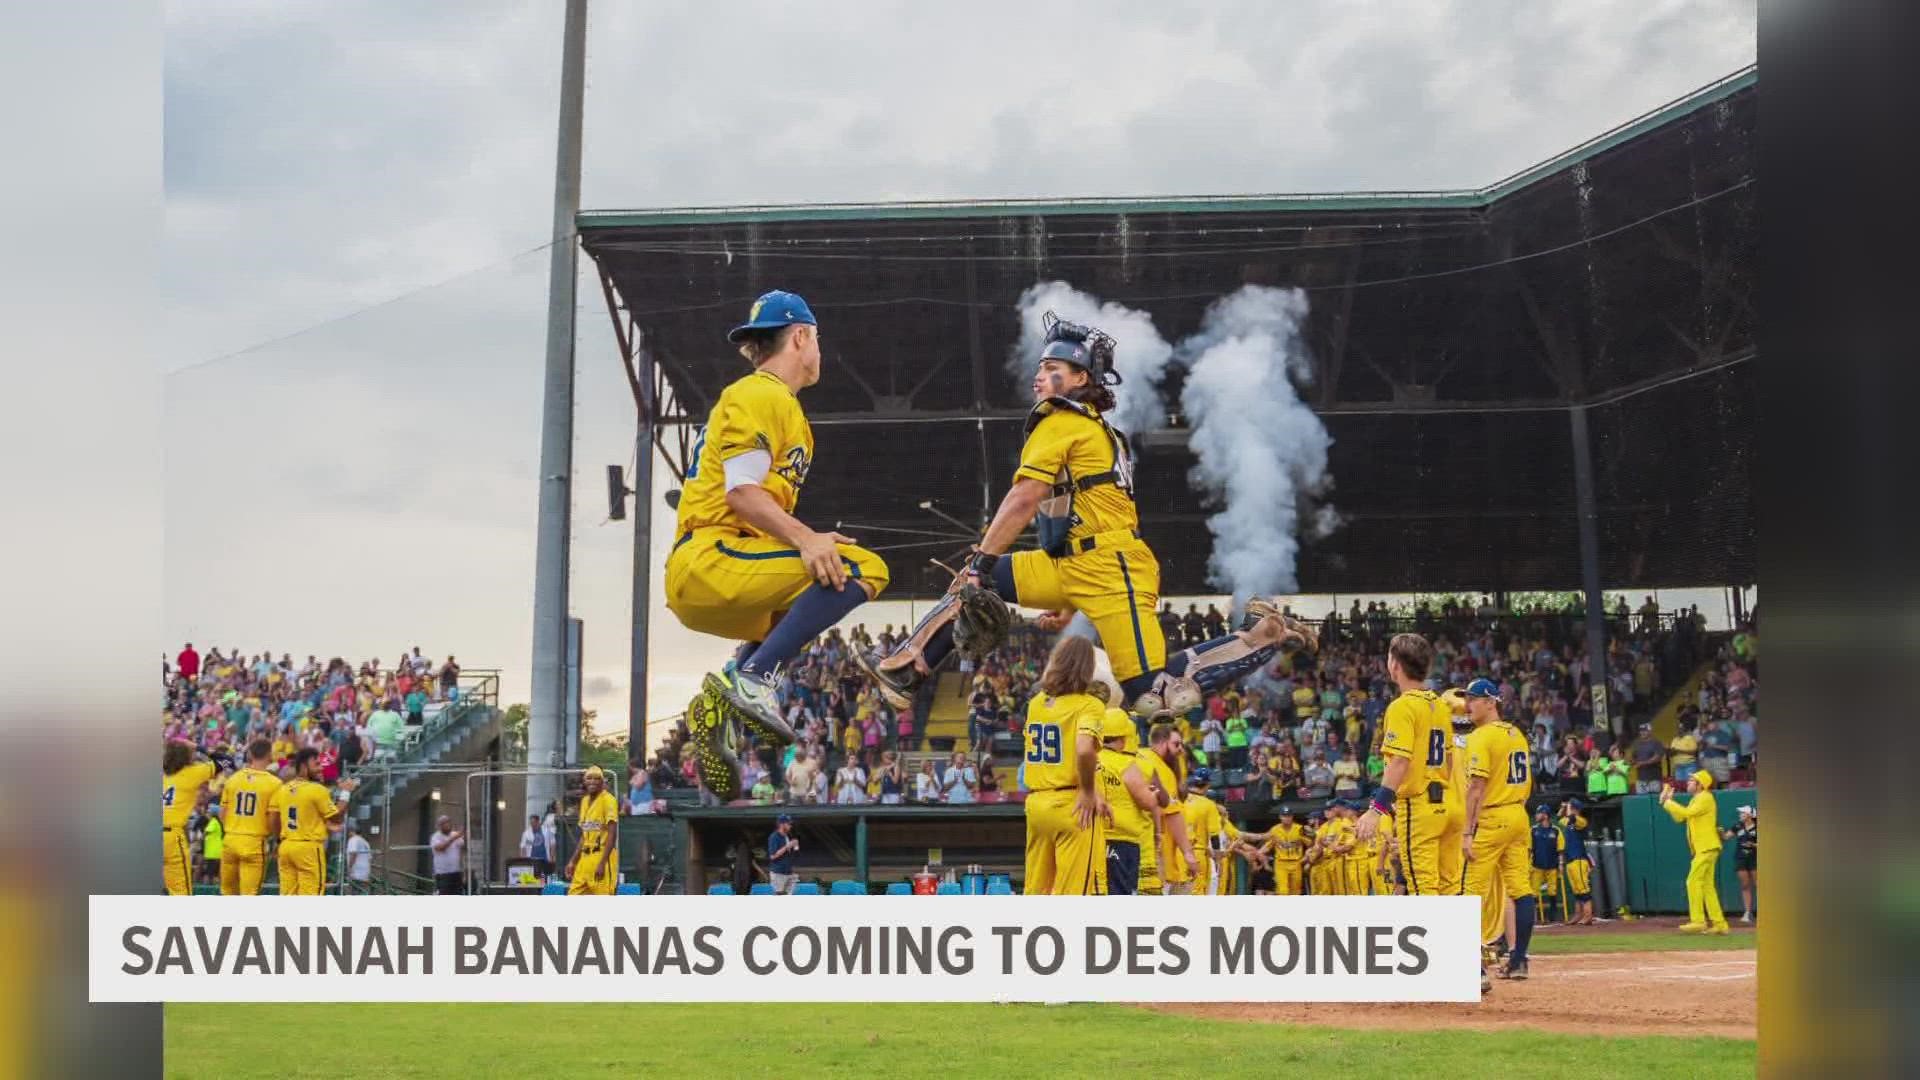 Go bananas, Des Moines — Savannah Bananas are coming to Principal Park